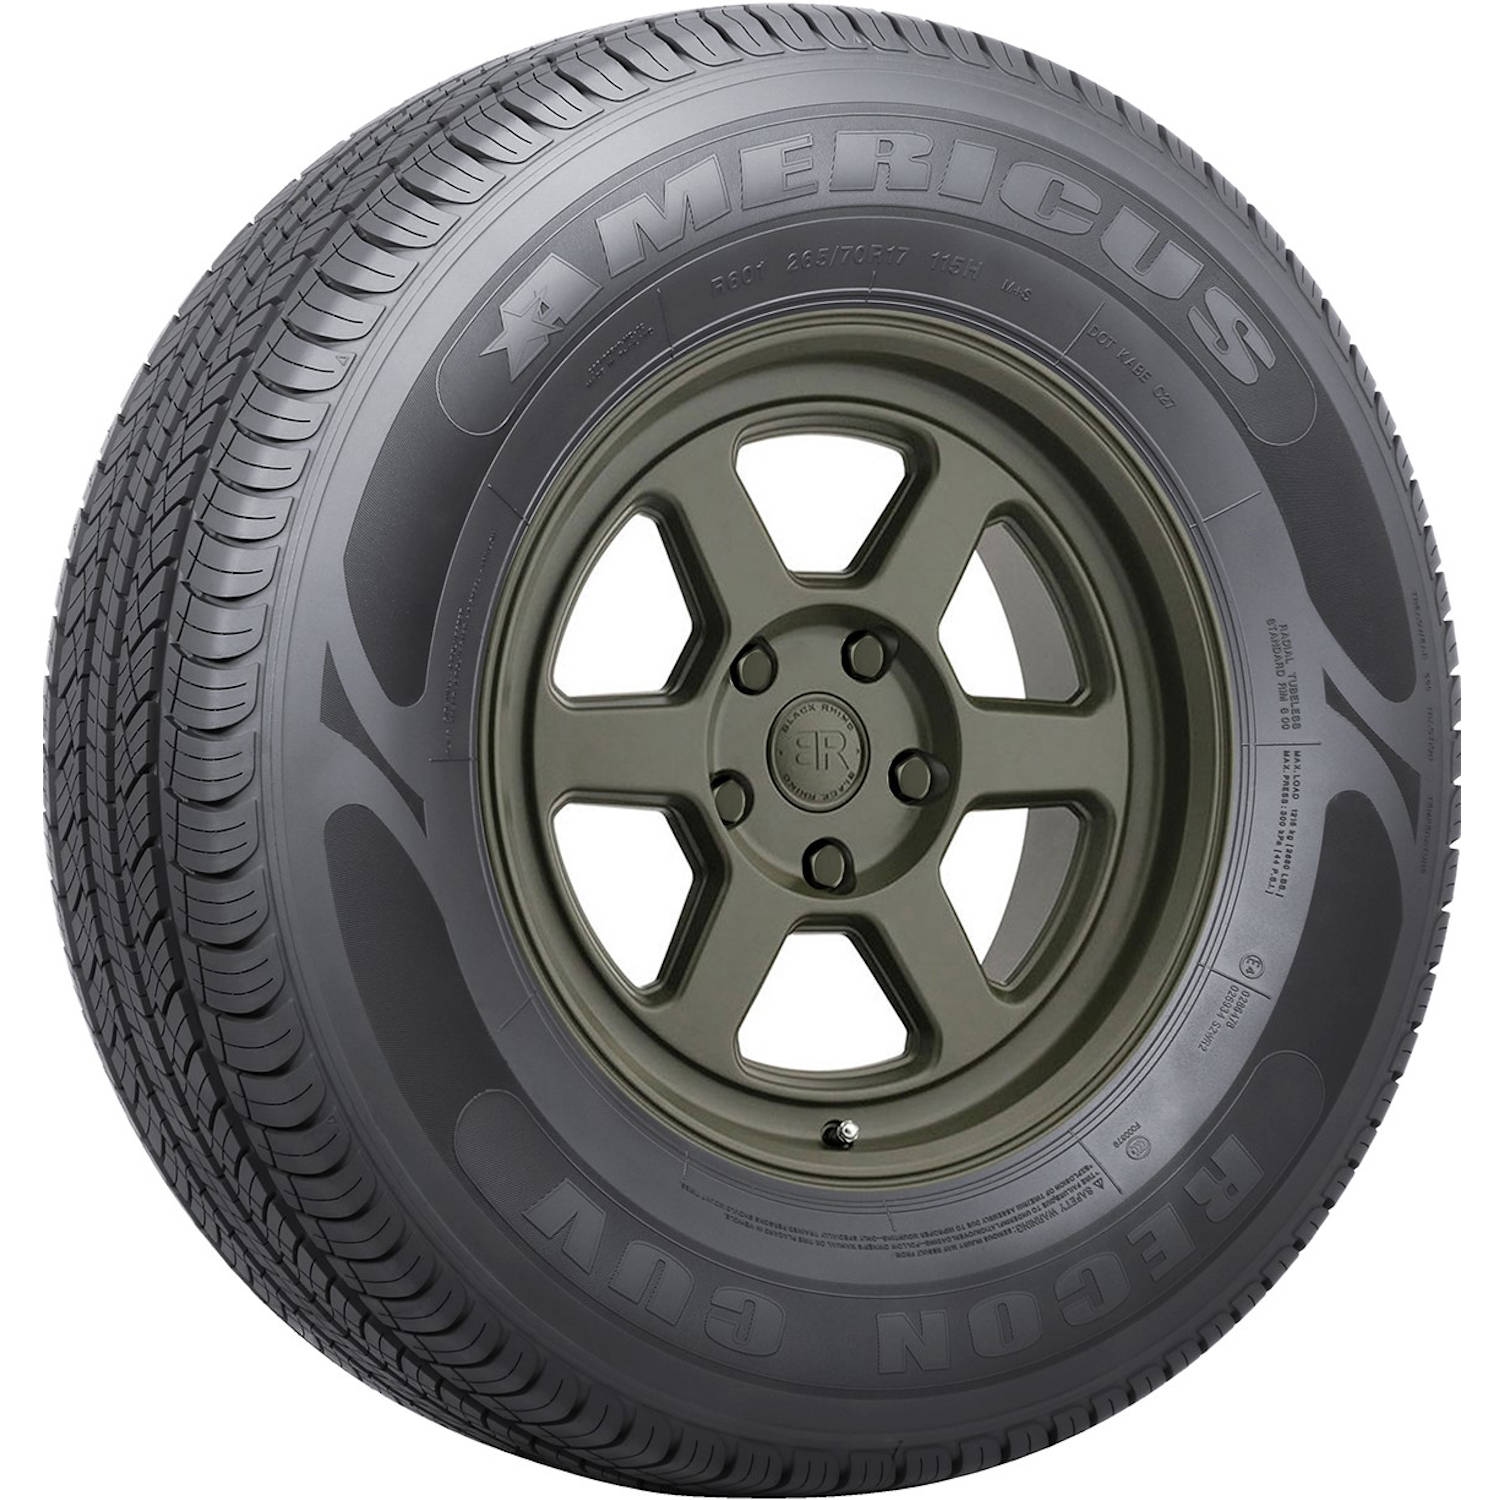 AMERICUS RECON CUV 265/65R17 (30.6X10.4R 17) Tires